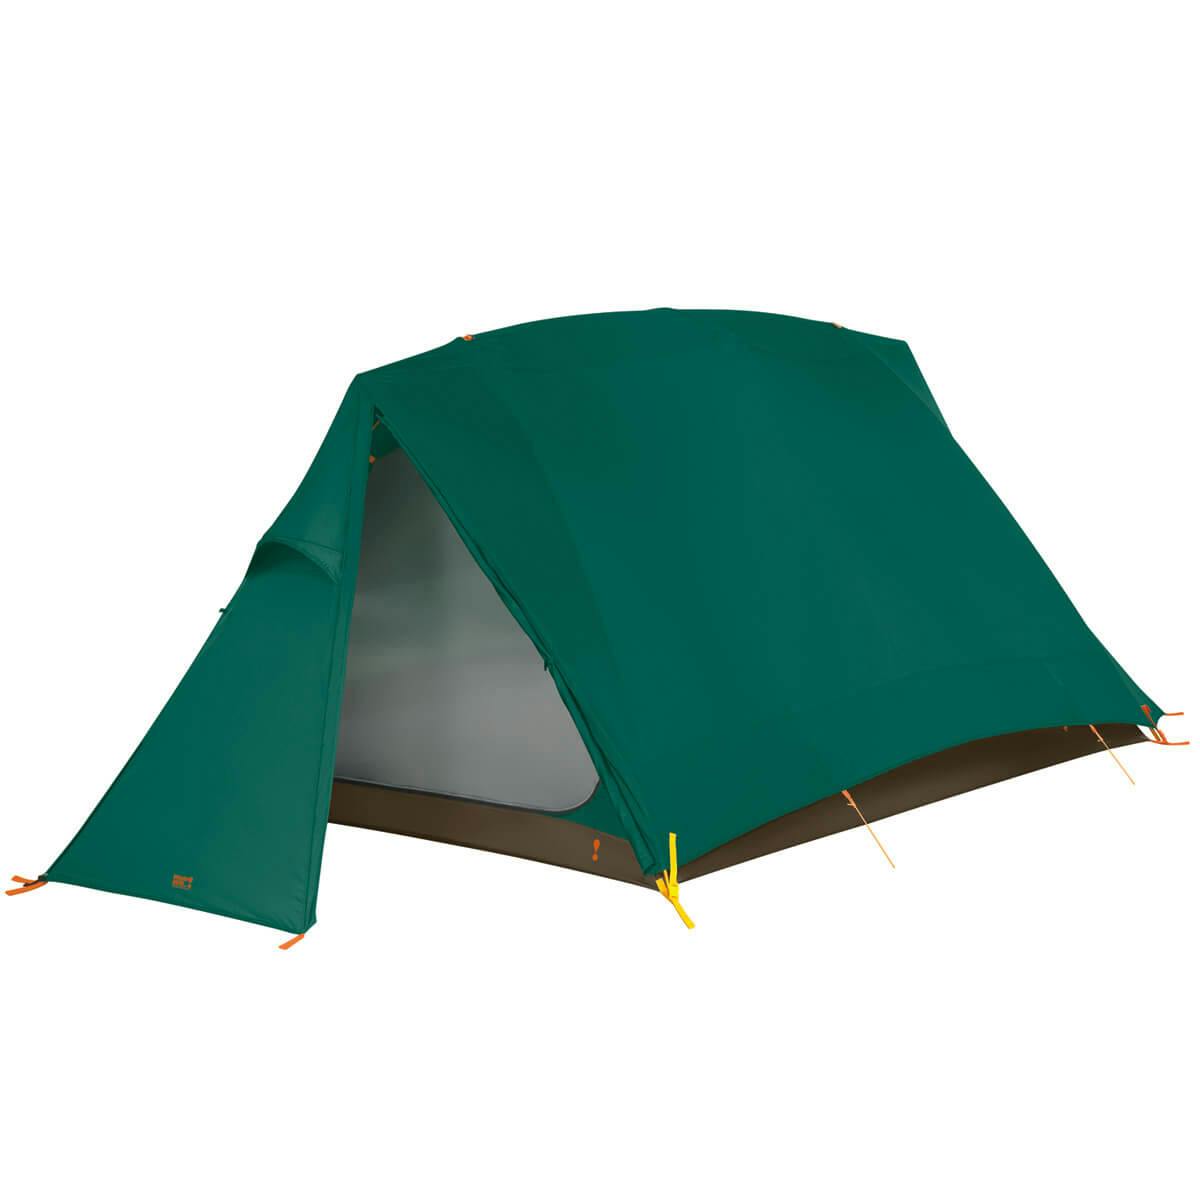 Eureka! Timberline SQ 4XT 4 Person Tent · Green/White